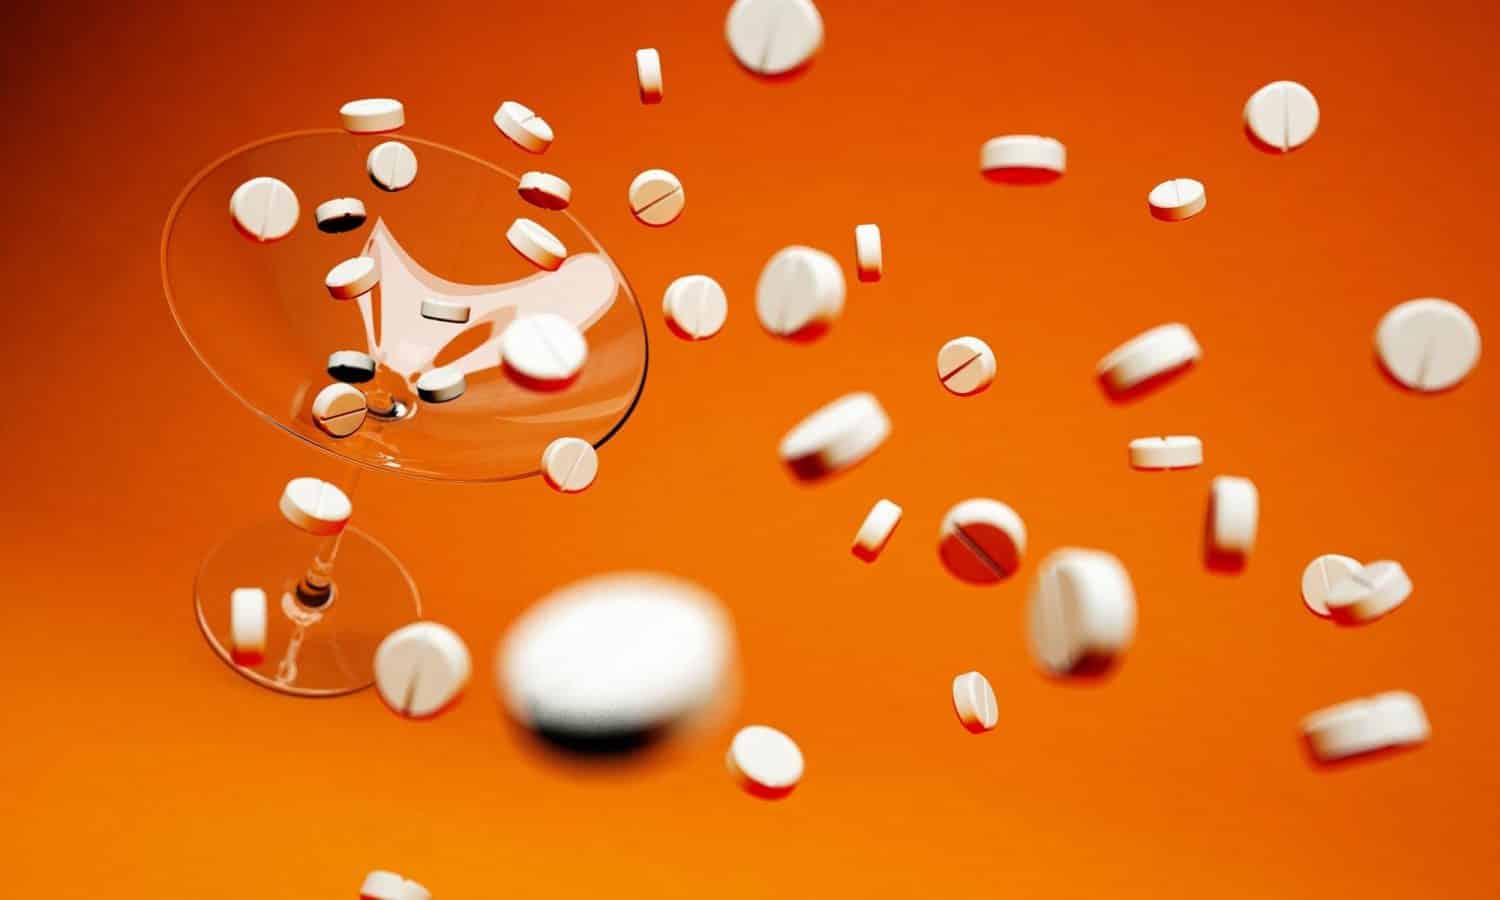 pills on orange background